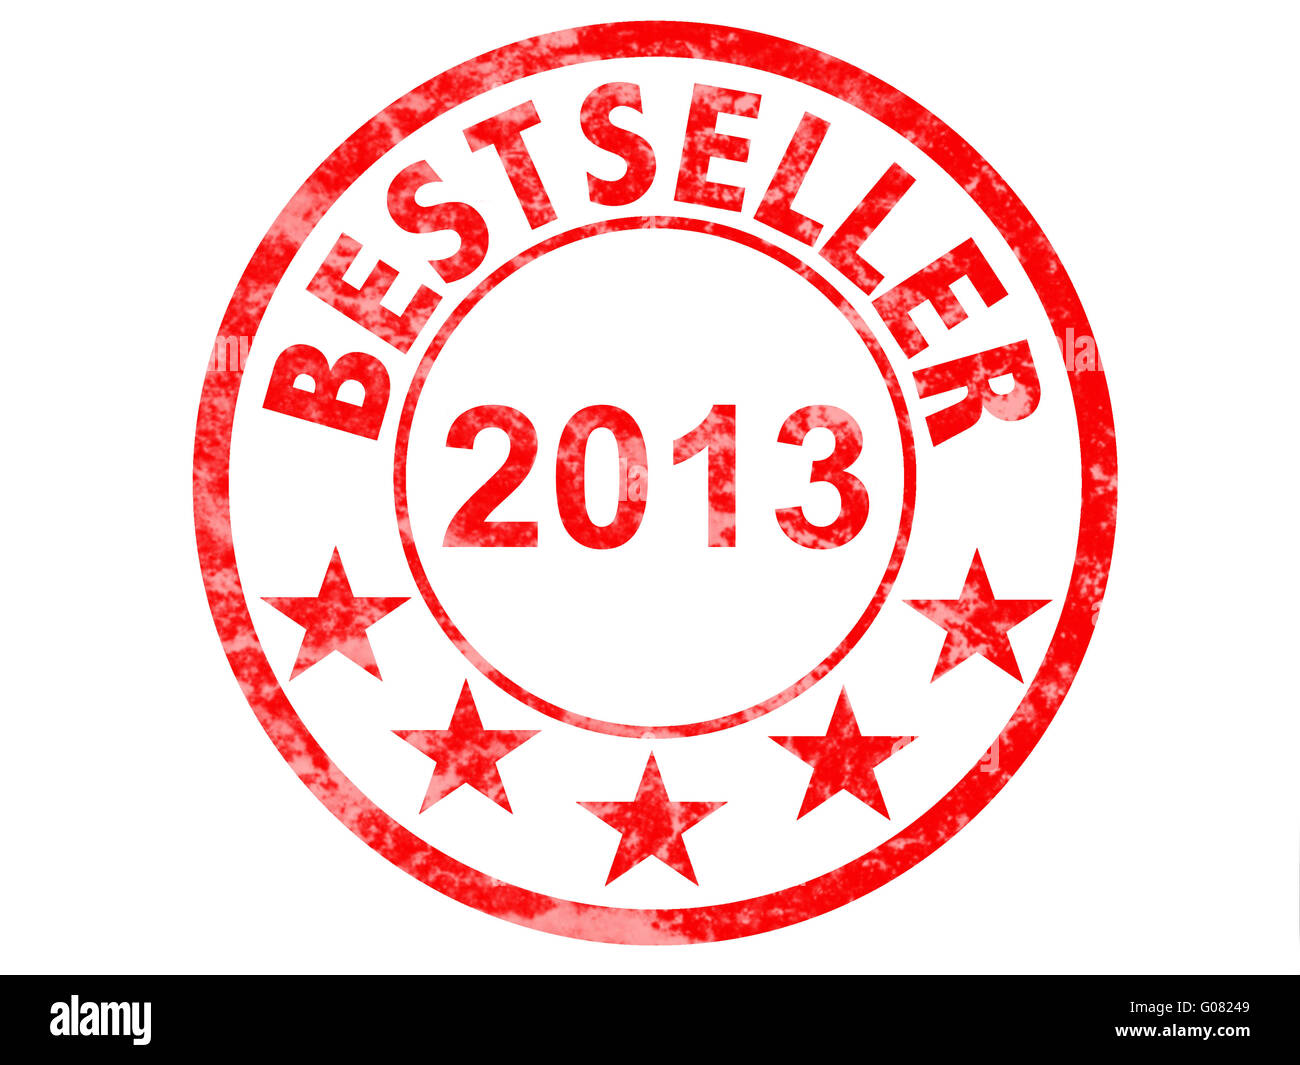 Grunge Gummi Stempel mit Bestseller 2013 markiert Stockfoto